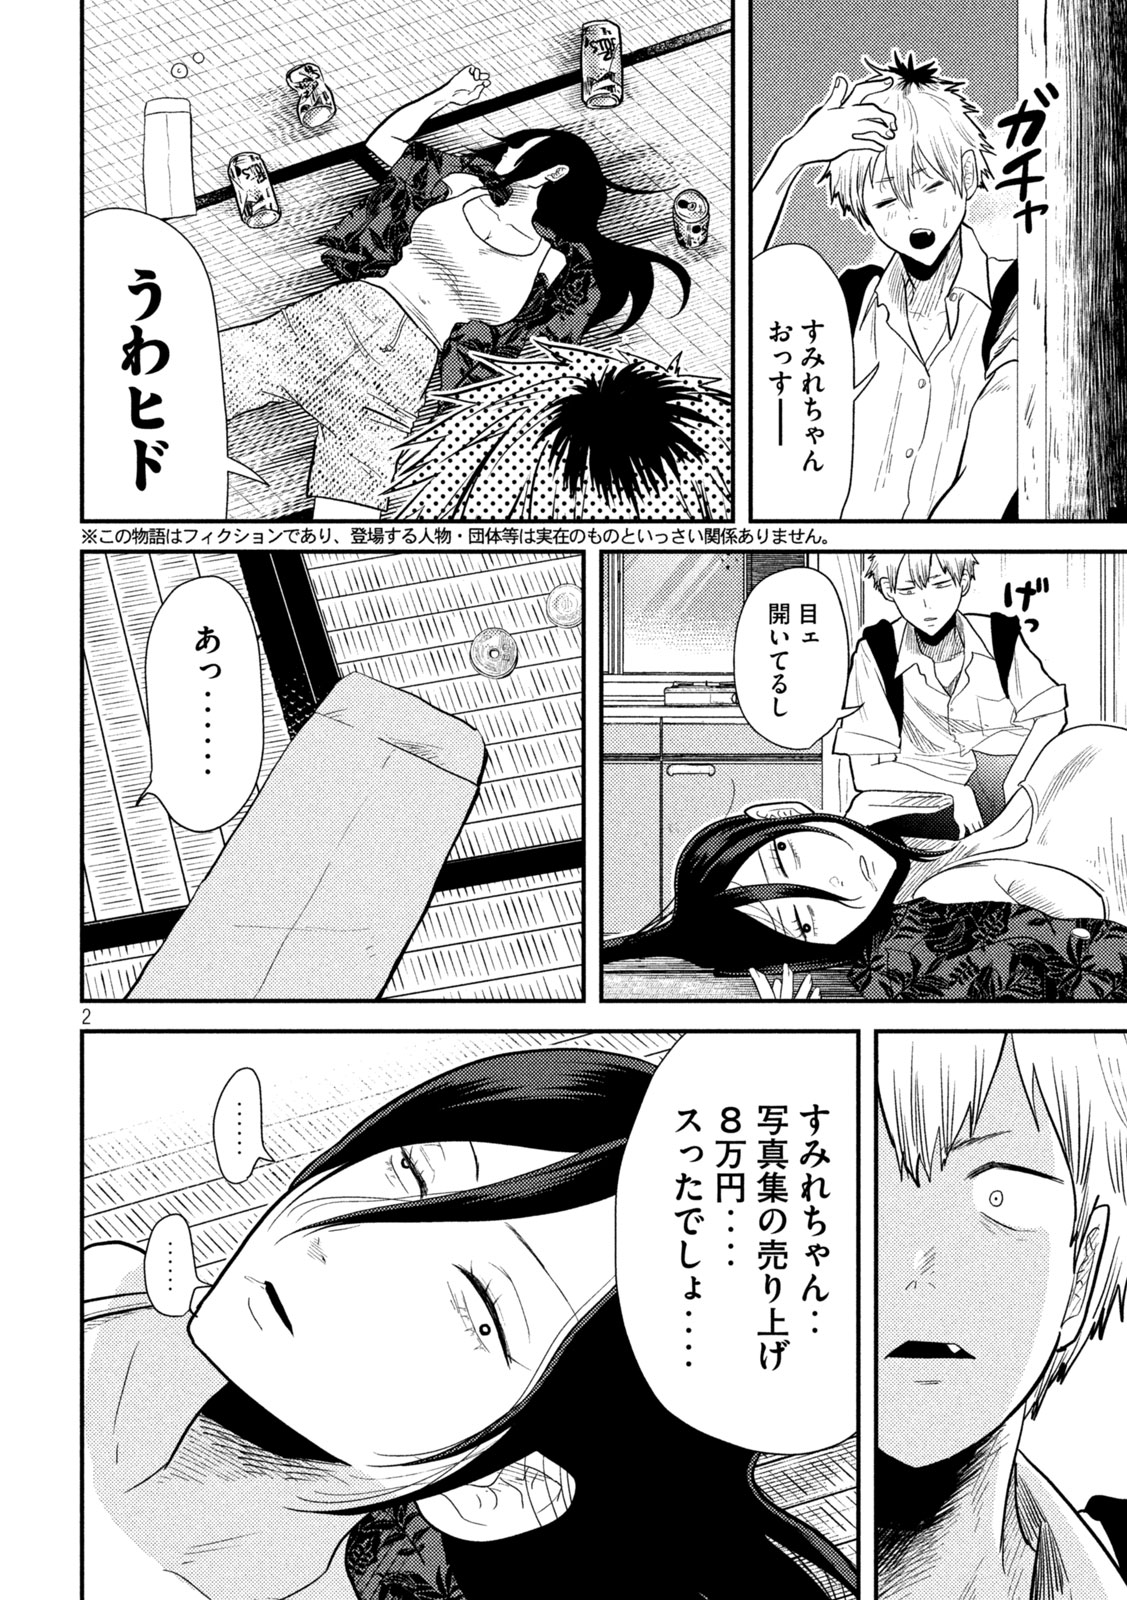 Heisei Haizanhei Sumire-chan - Chapter 4 - Page 2